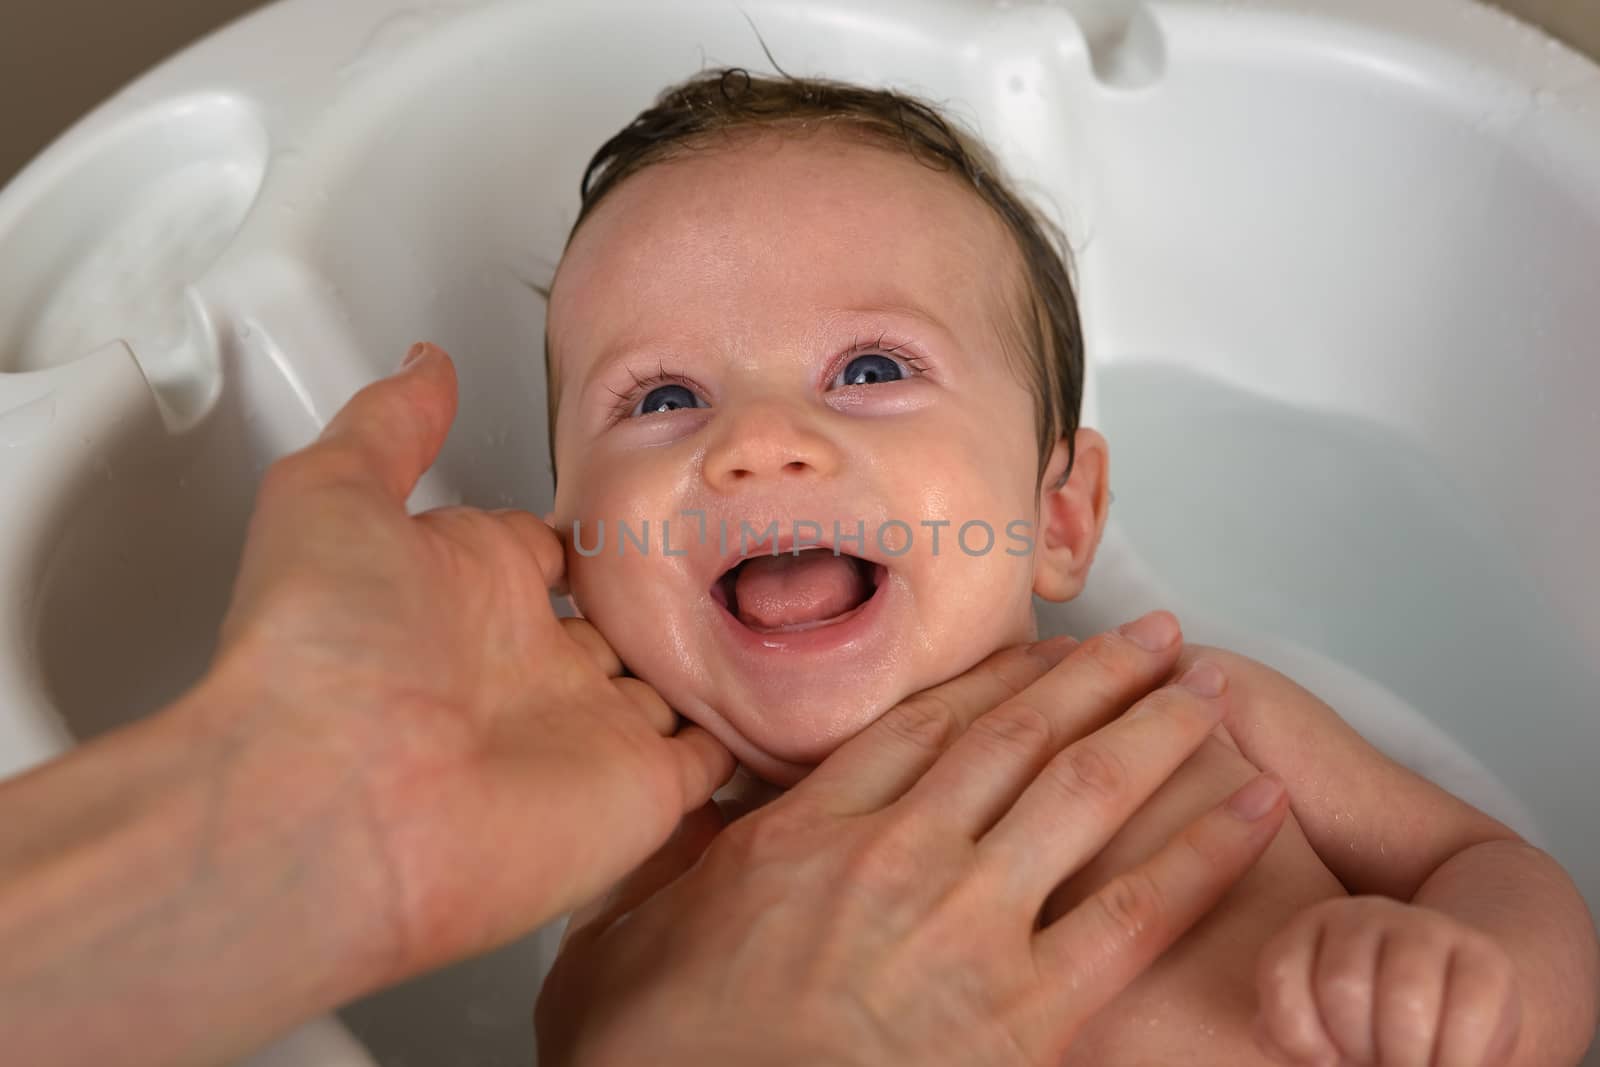 Newborn smiling while taking bath.